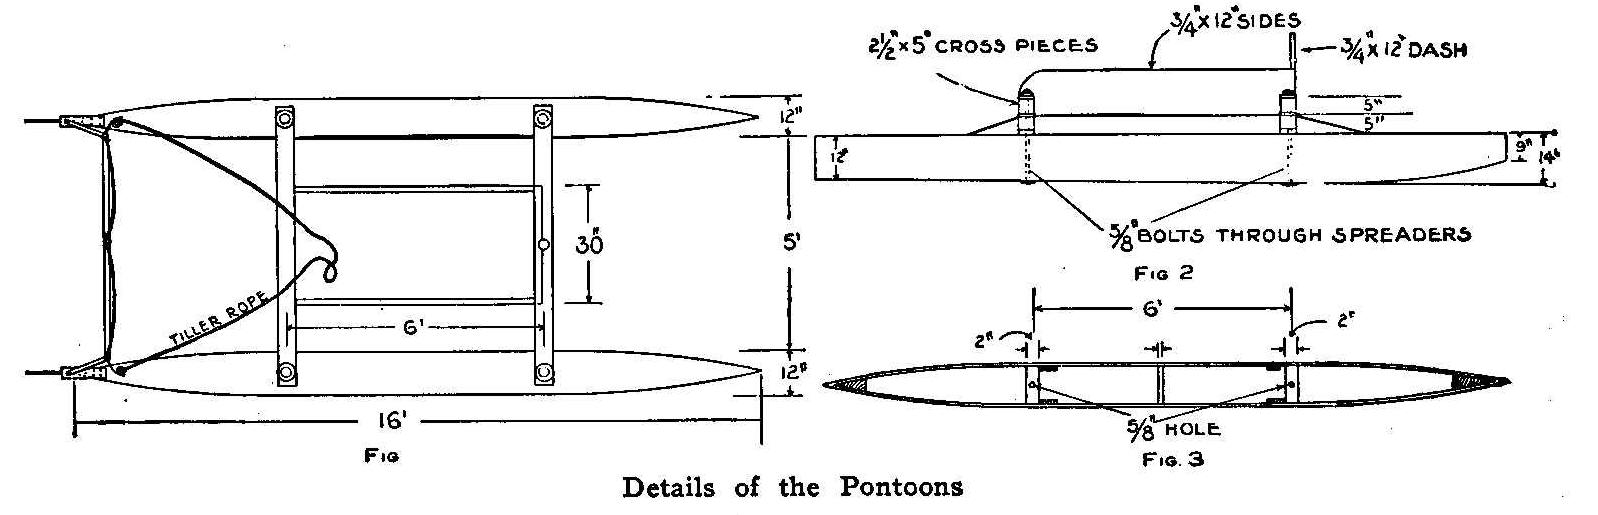 Details of the Pontoons 